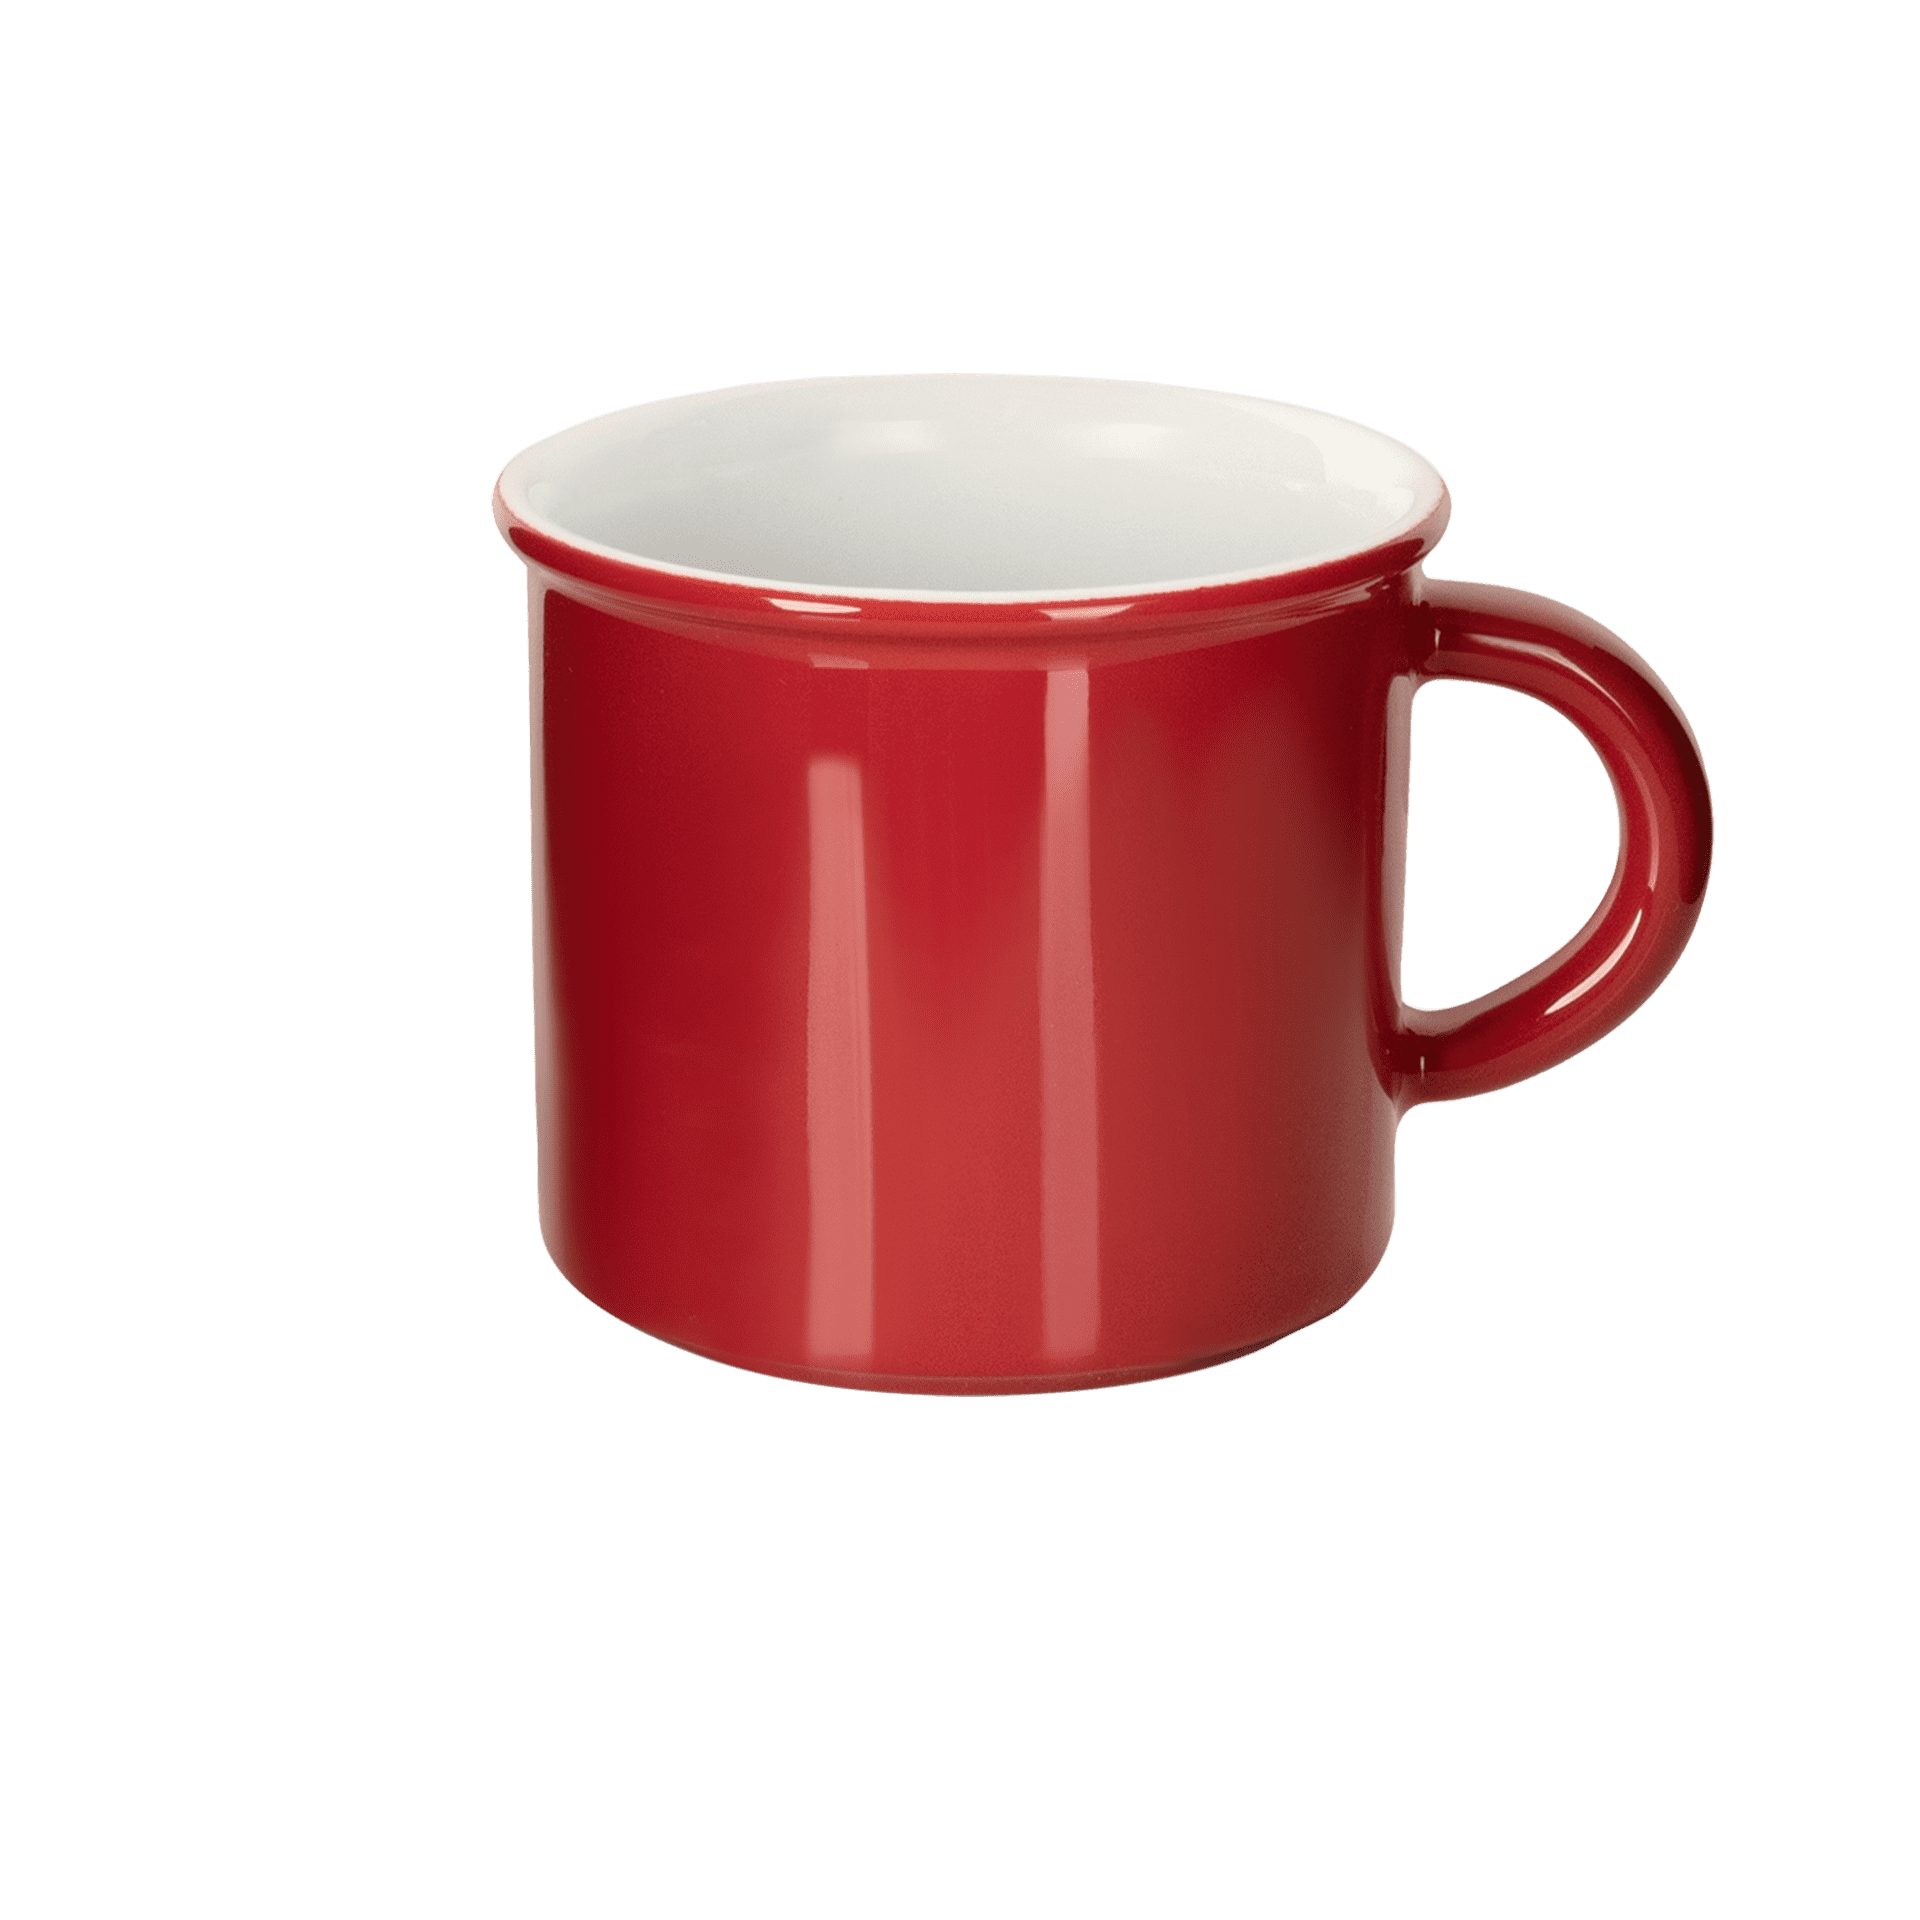 Mahlwerck Manufaktur Tasse Retro Kaffeetasse, Porzellan, 300 ml, spülmaschinenfest, 100 % klimaneutral, Made in EU Salsa Red, glänzend